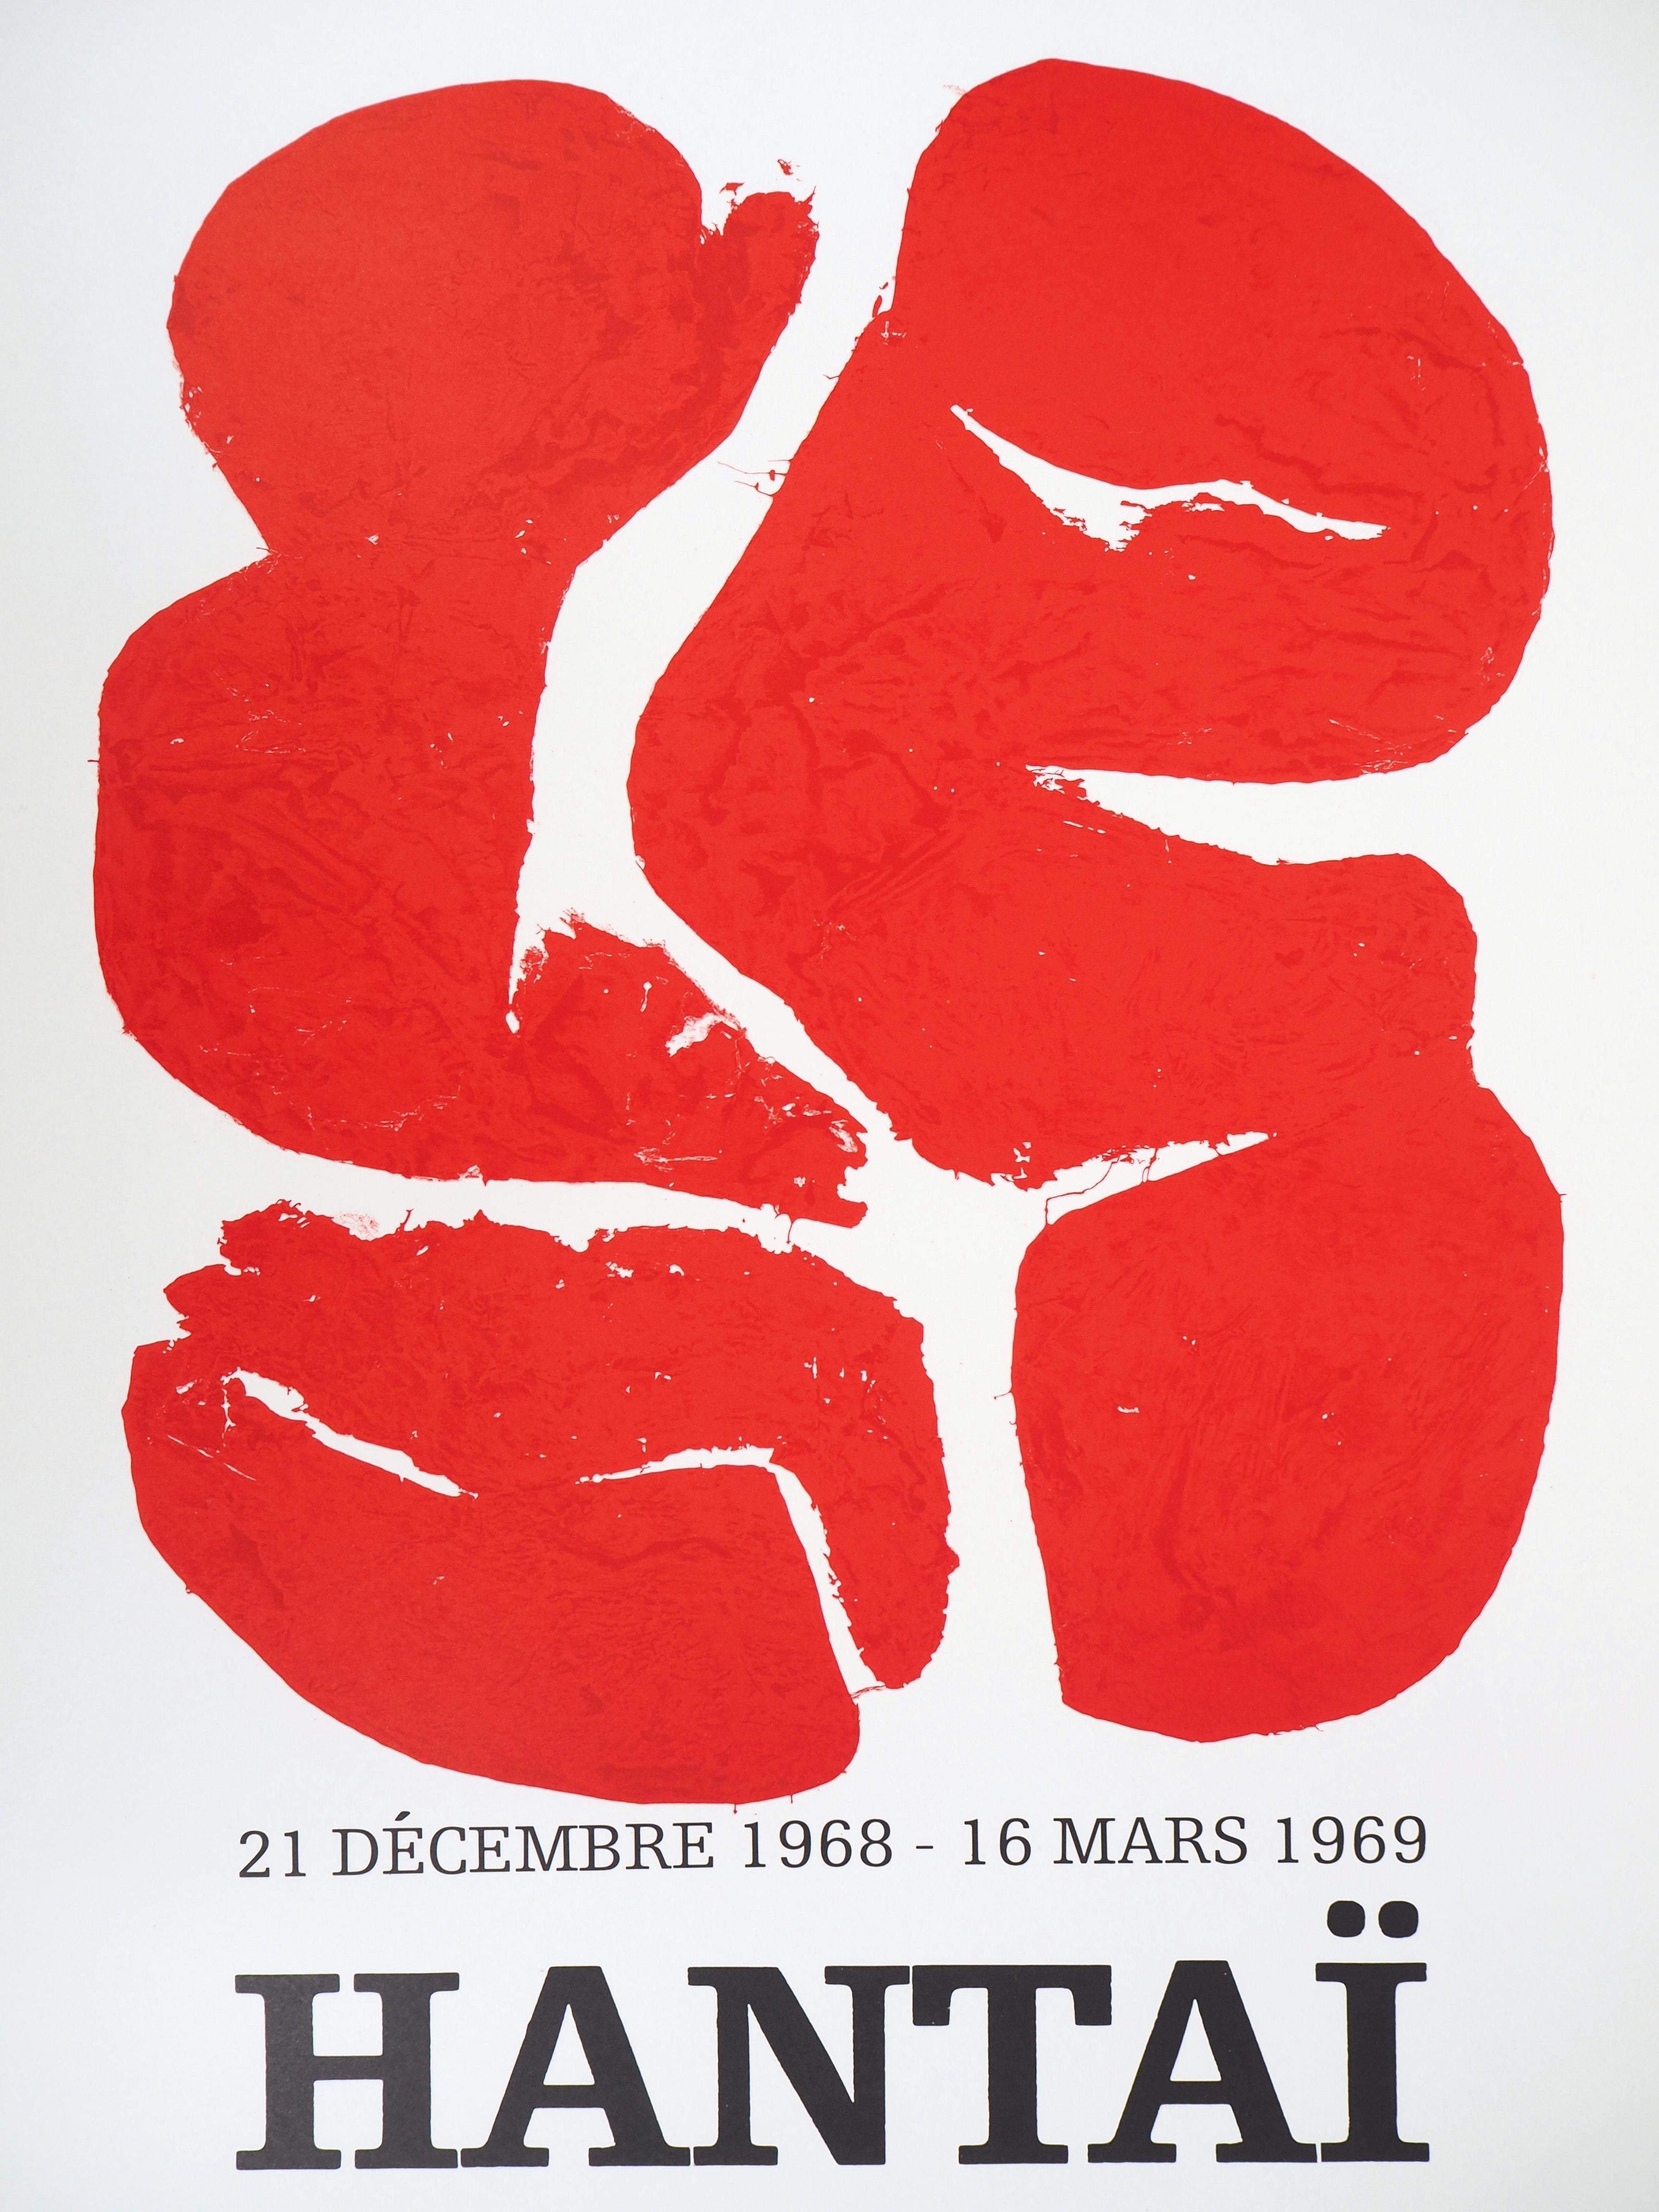 Abstract Red Tabula - Original Lithograph Poster (Fondation Maeght, 1969) - Print by Simon Hantaï